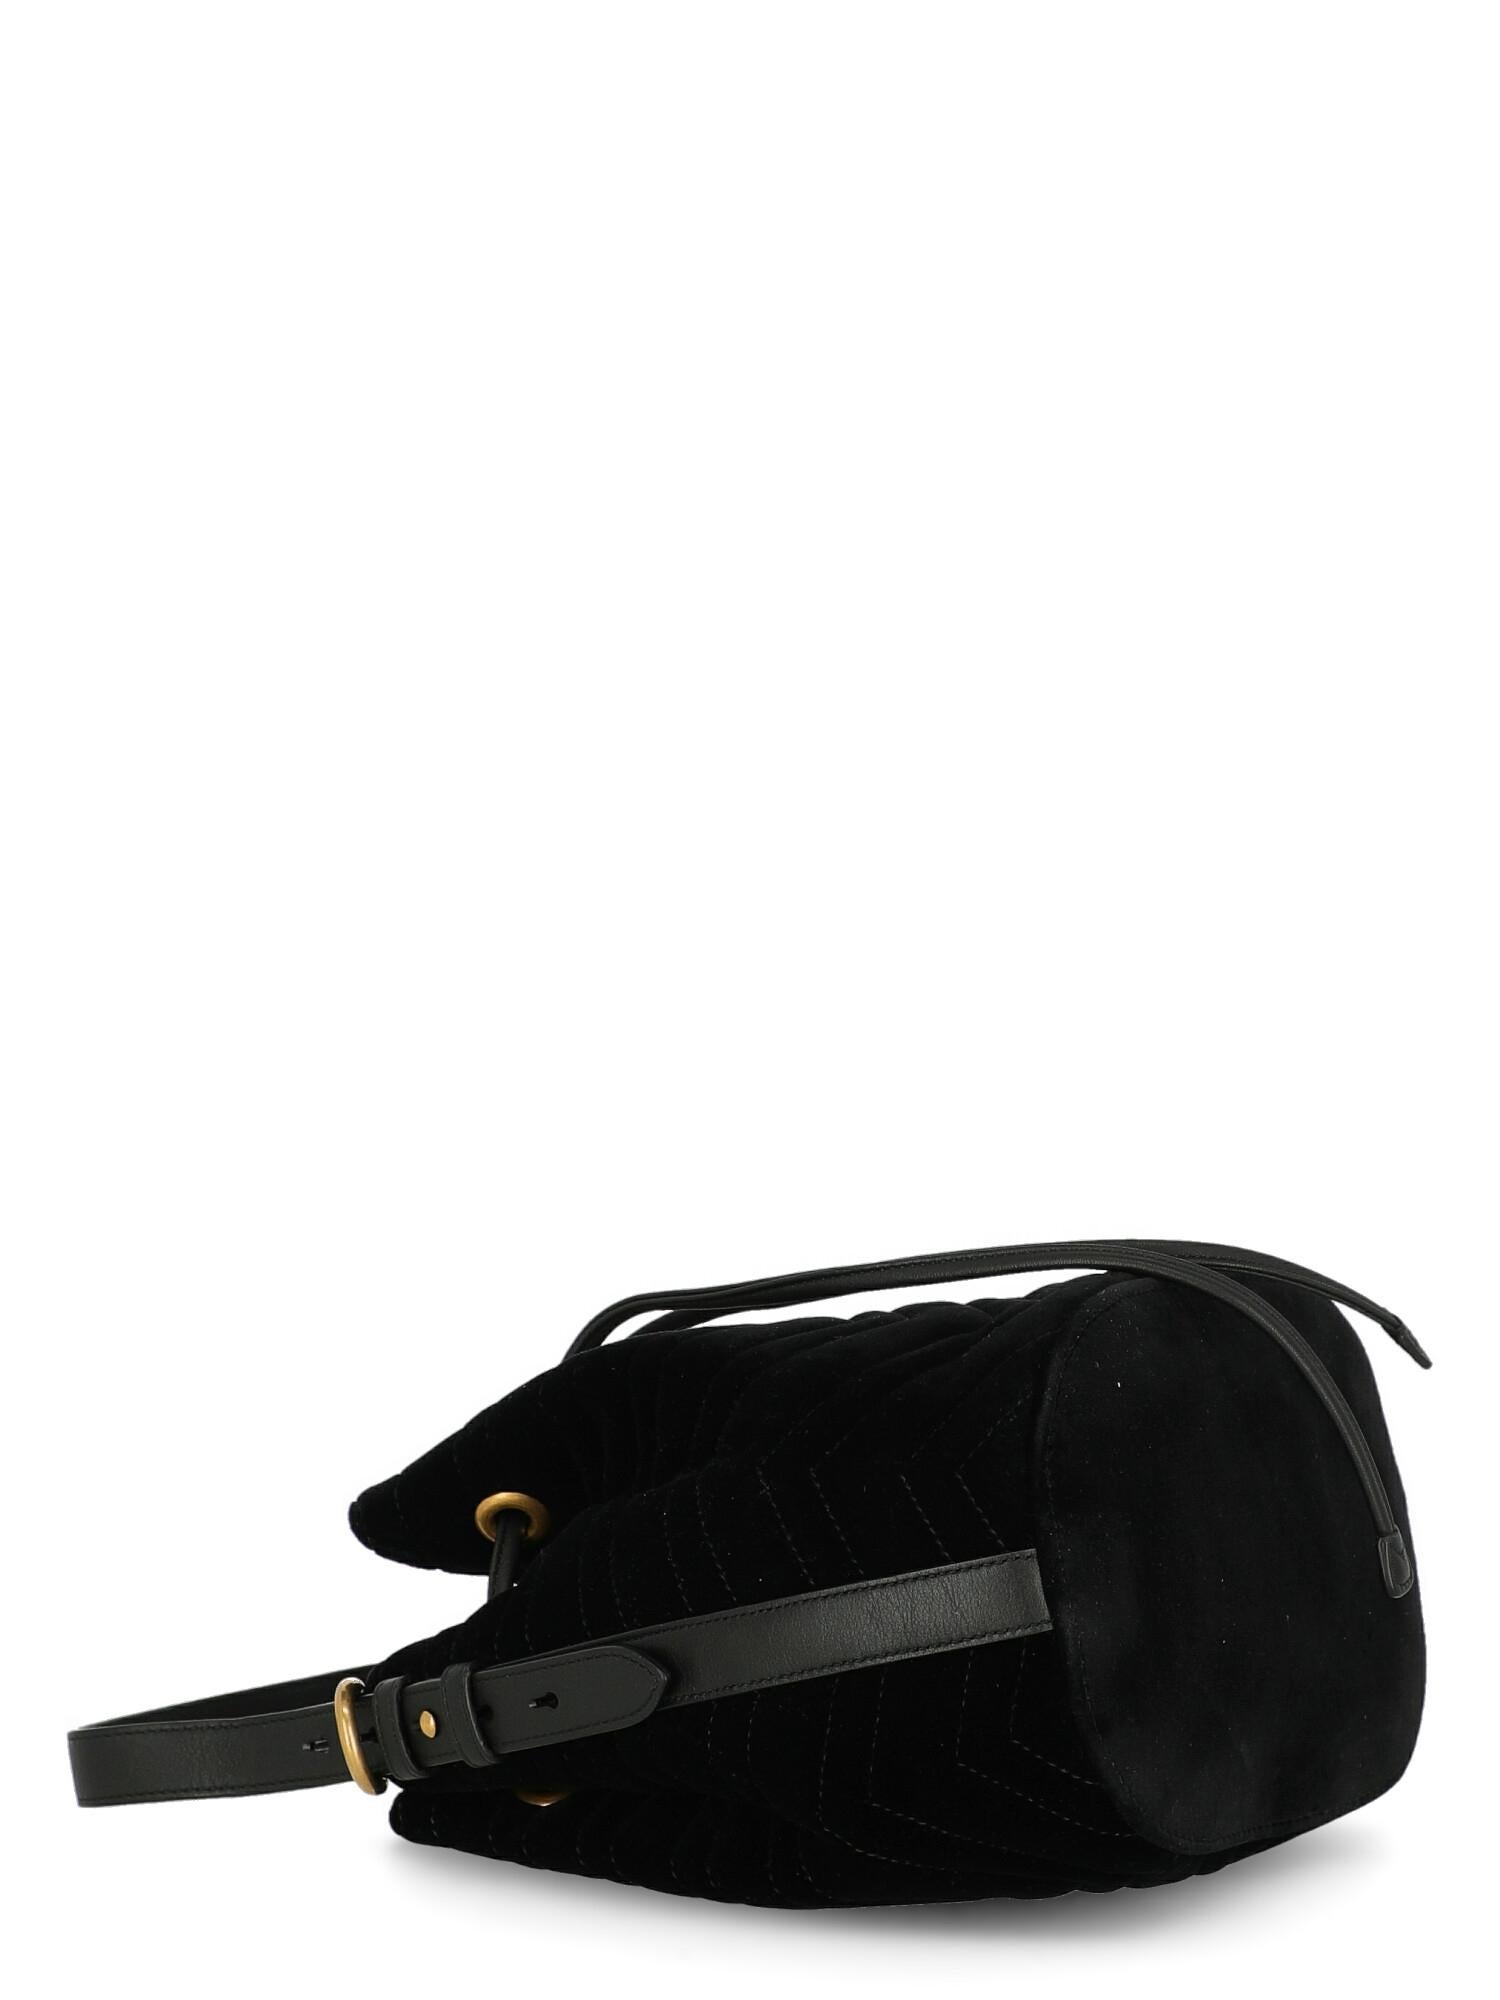 Gucci Woman Shoulder bag Marmont Black Fabric For Sale 1